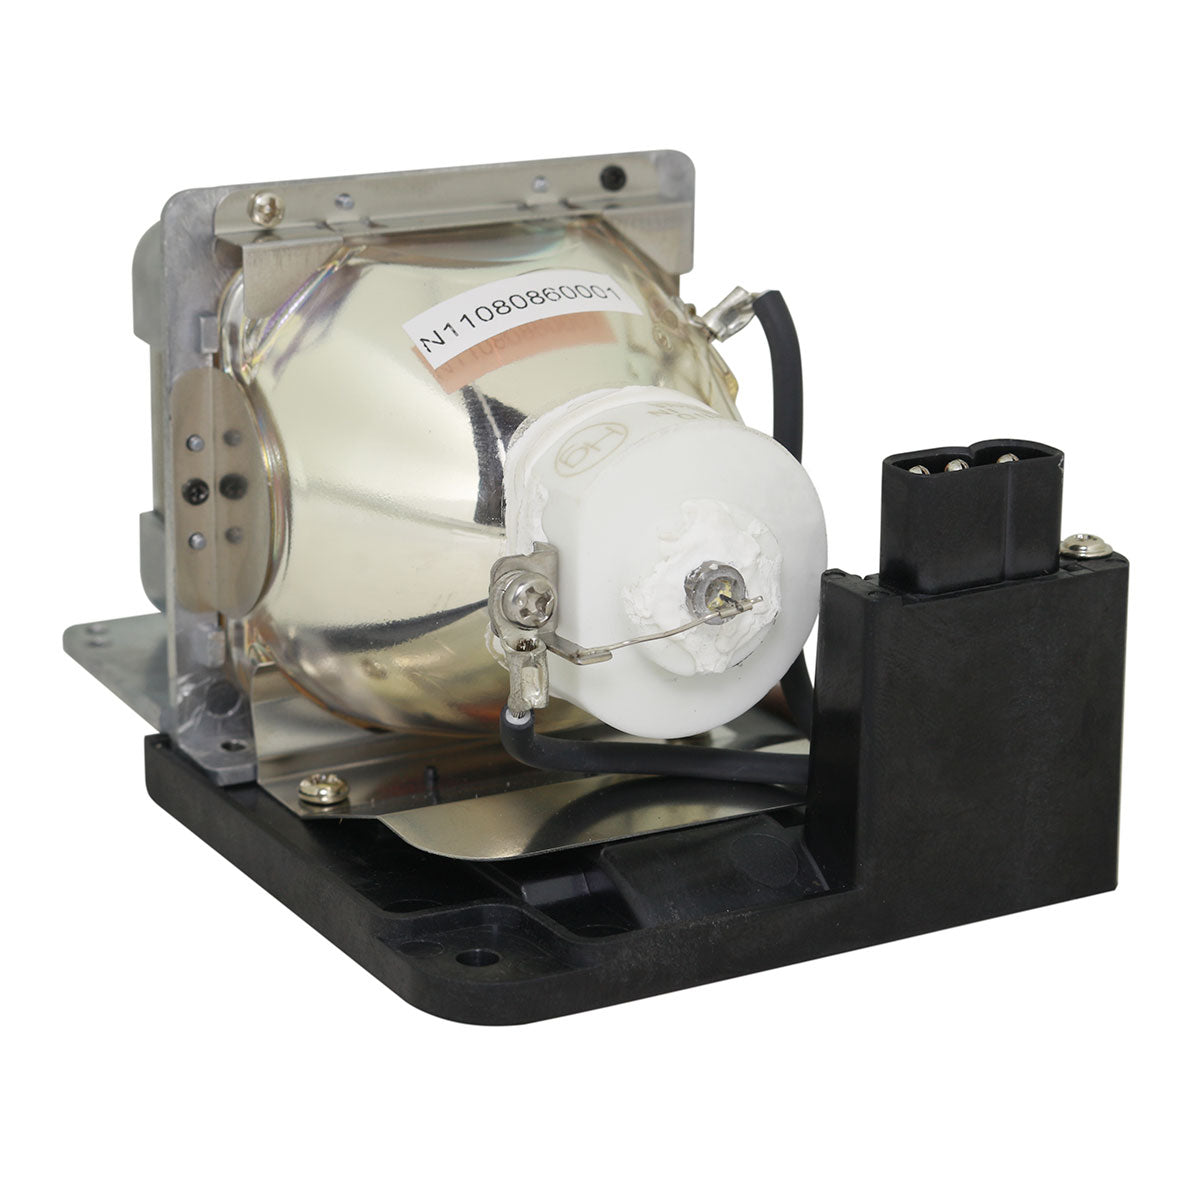 Viewsonic RLC-019 Ushio Projector Lamp Module